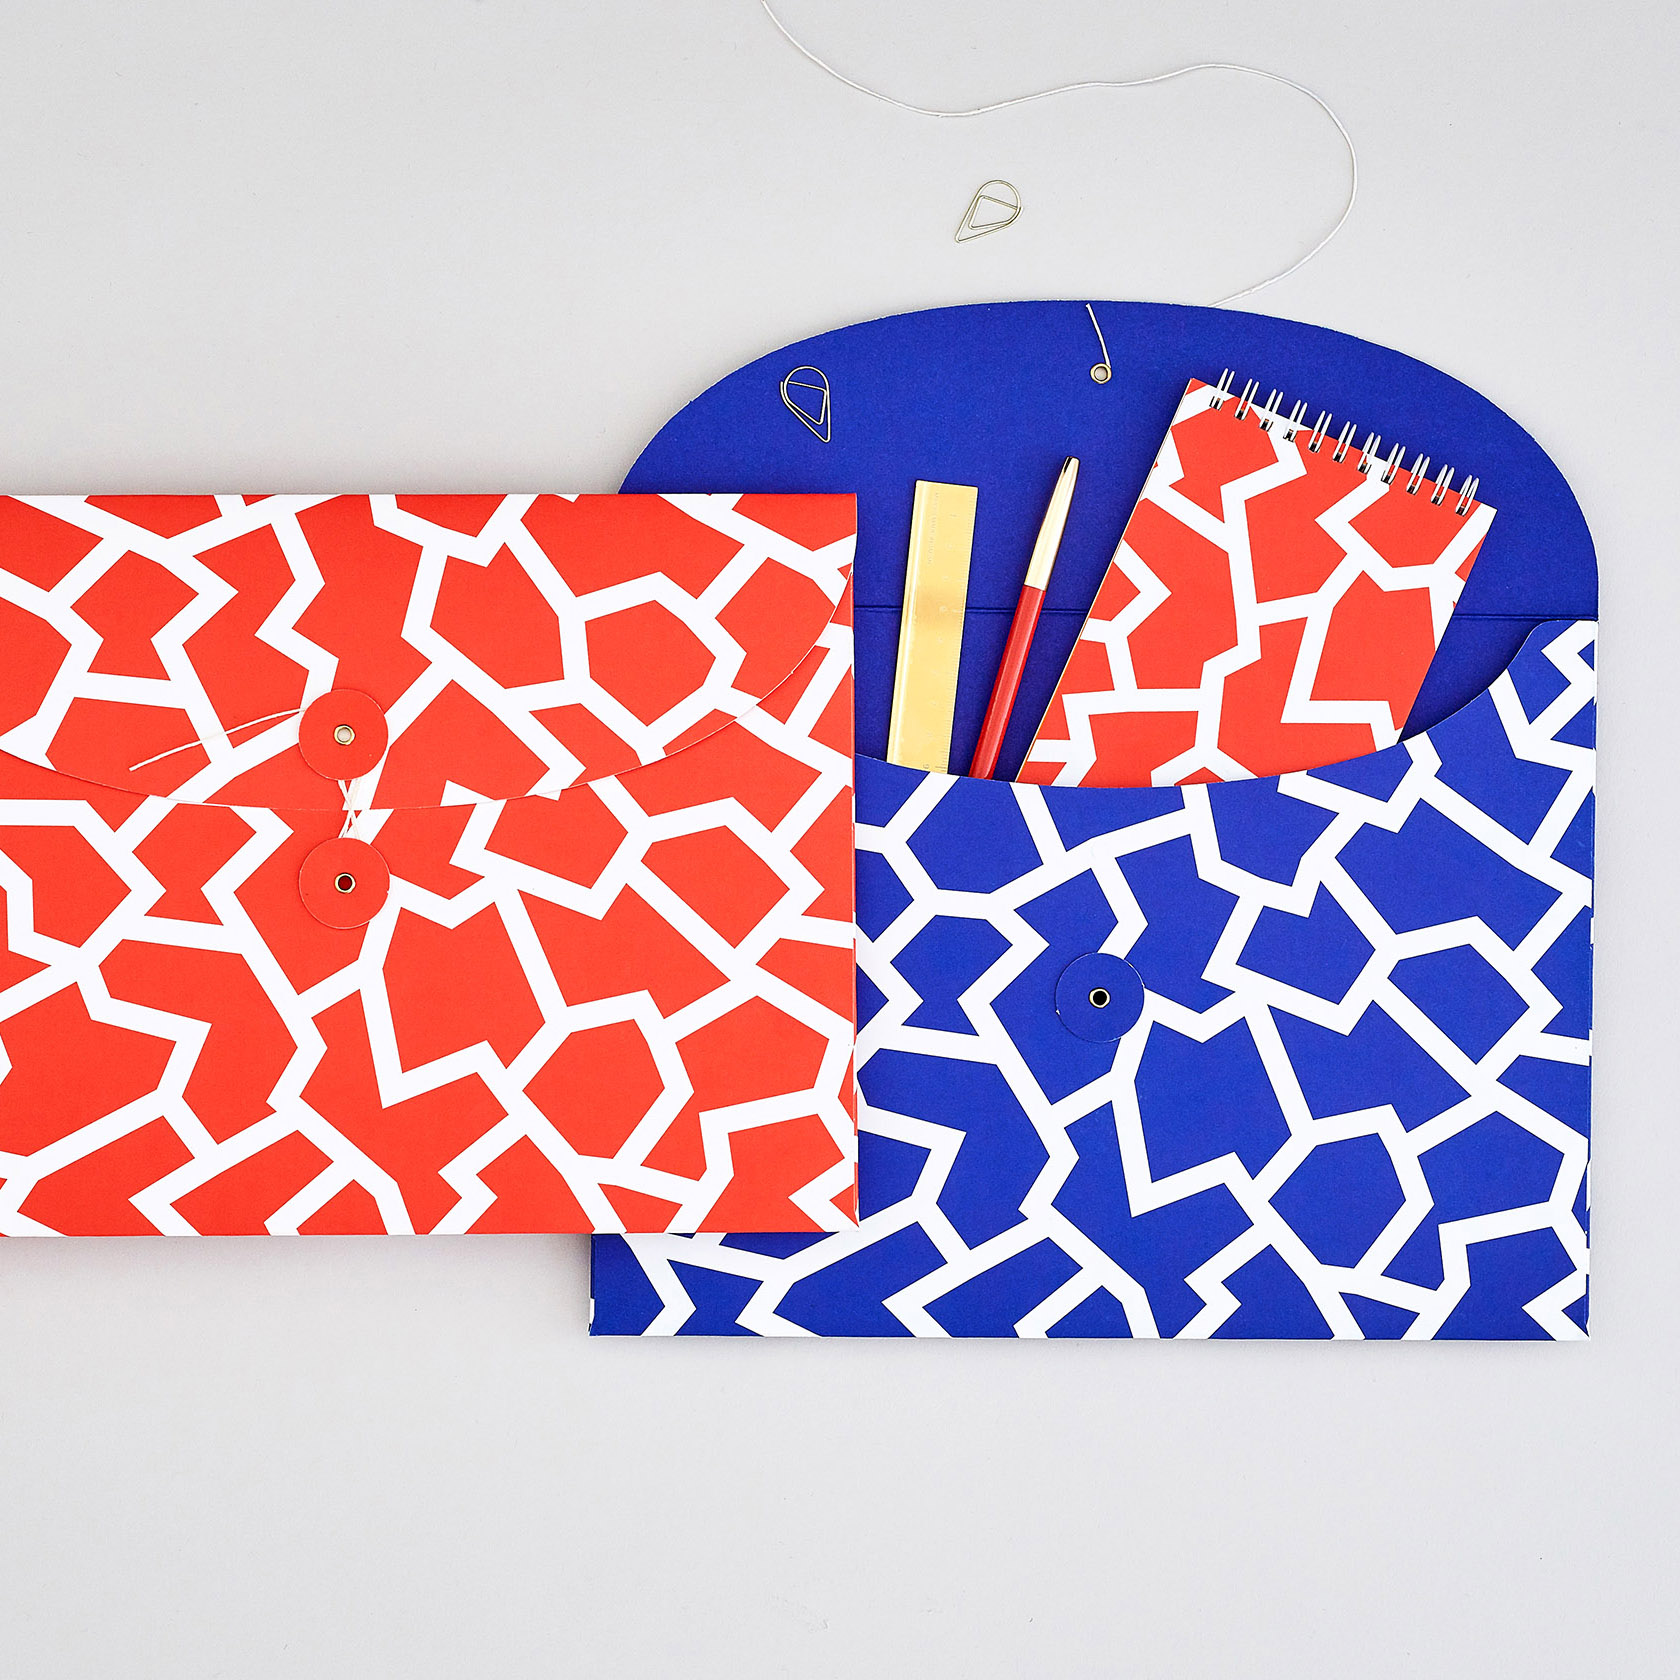 Organiser Envelopes from Wrap designed by Leta Sobierajski